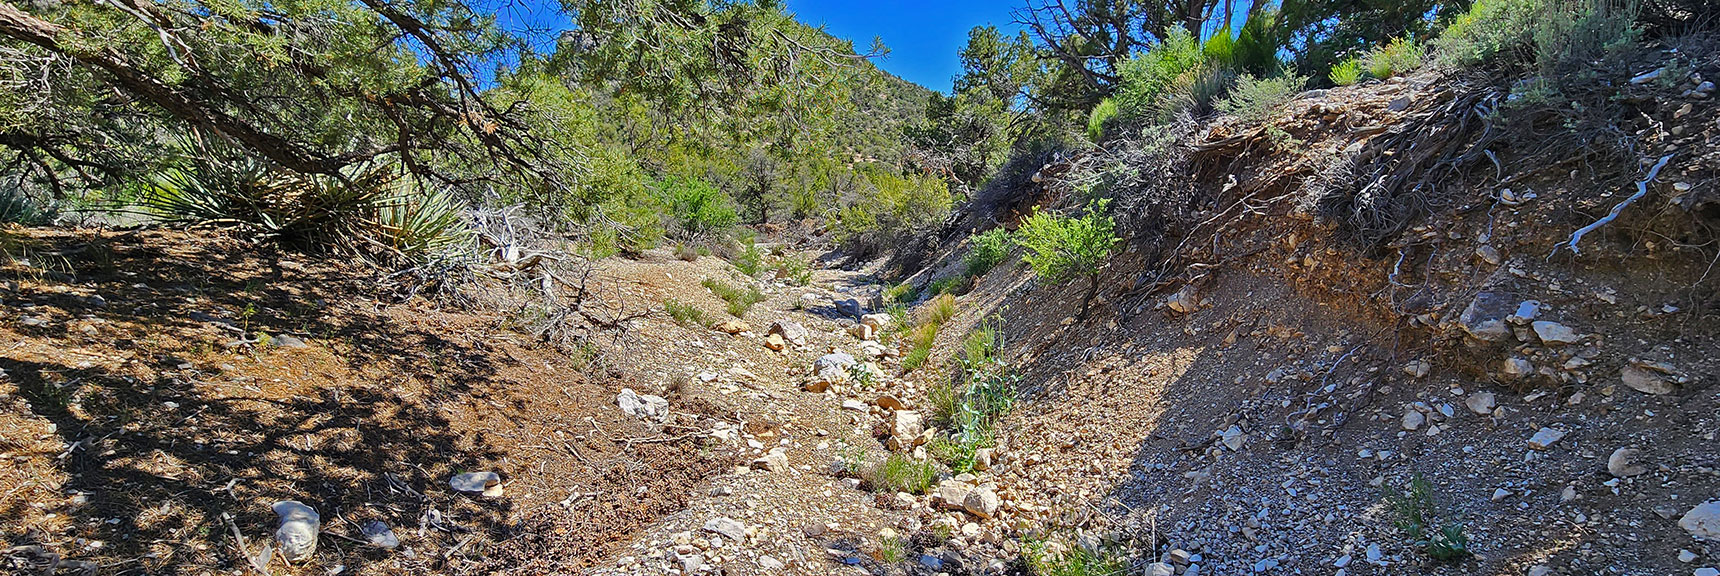 Washes Begin to Widen Lower Down. Endless Twists and Turns, Low Visibility | Mt Wilson to Hidden Peak | Upper Crest Ridgeline | Rainbow Mountain Wilderness, Nevada